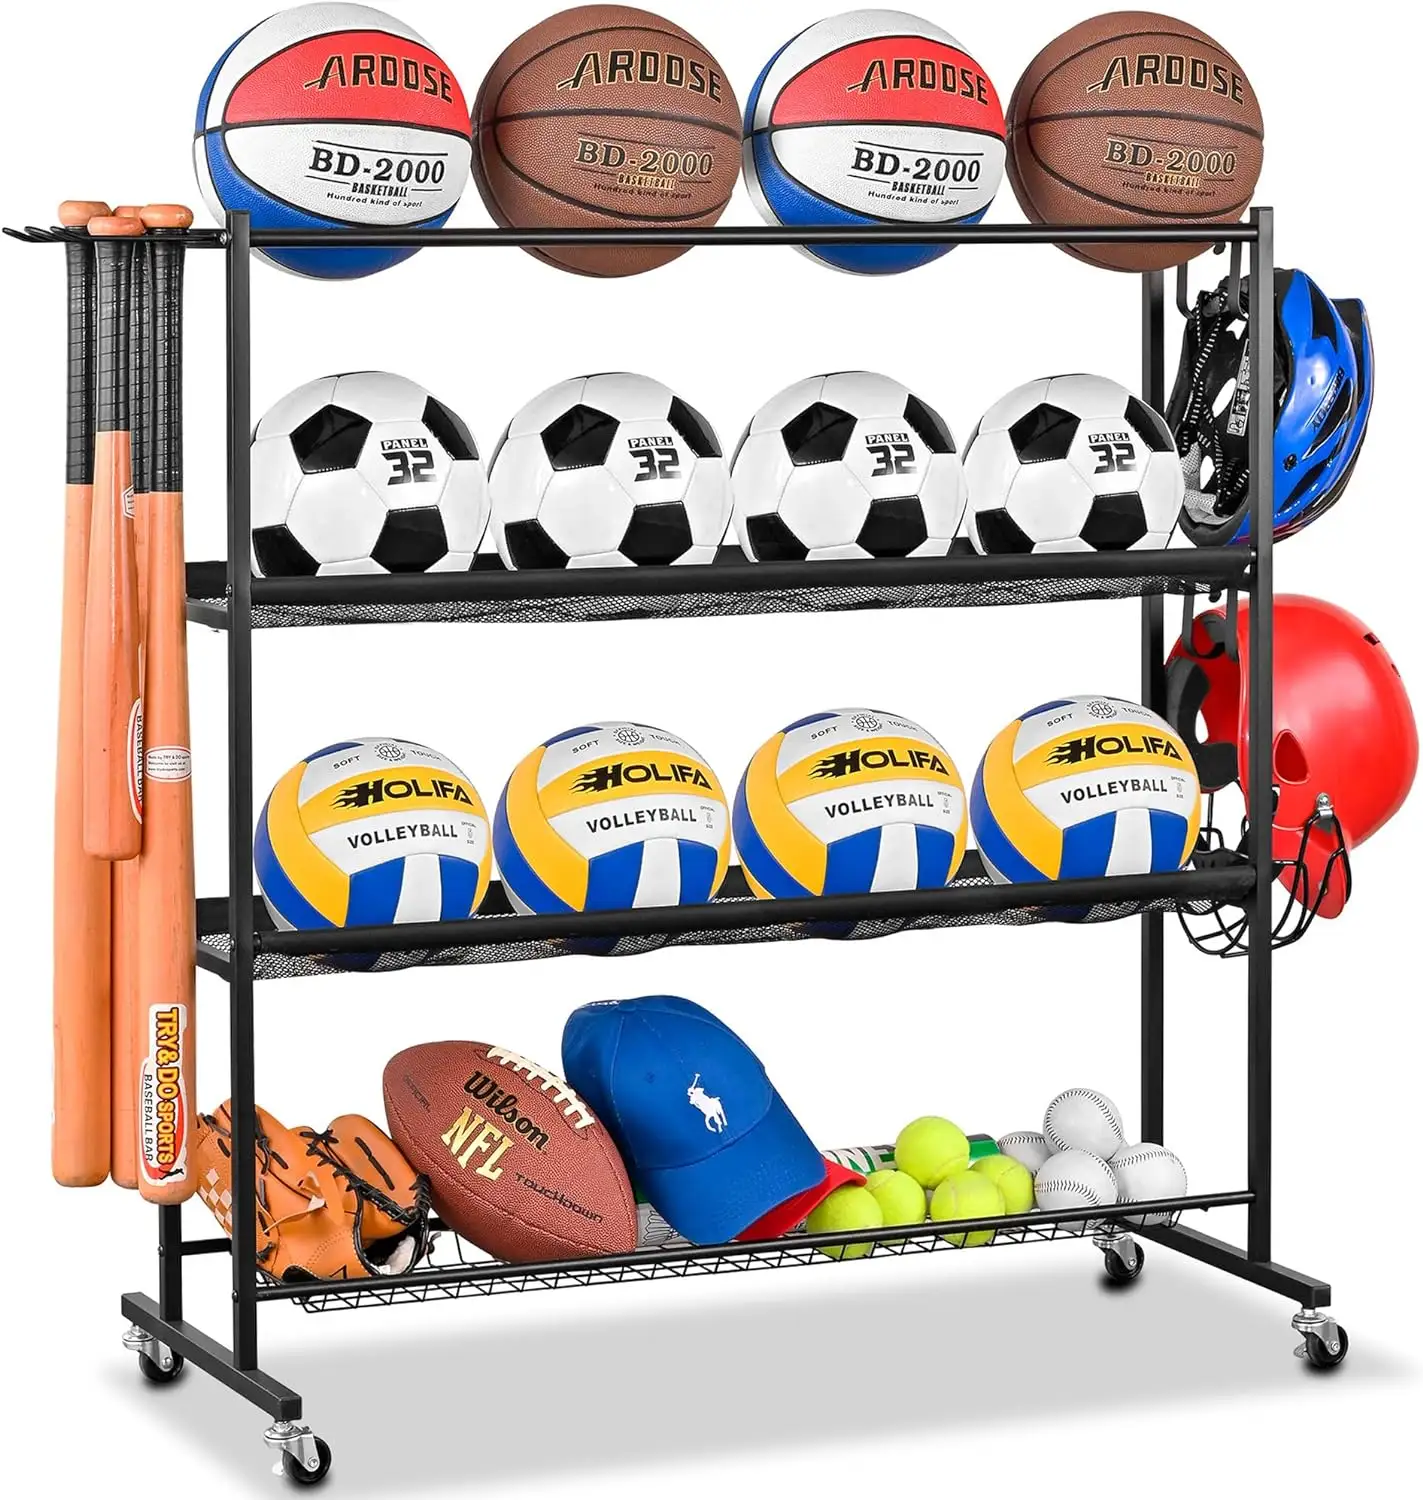 Almacenamiento de bolas con soporte para bate de béisbol, estante para bolas rodantes con malla de nailon extraíble para varios tamaños de bolas